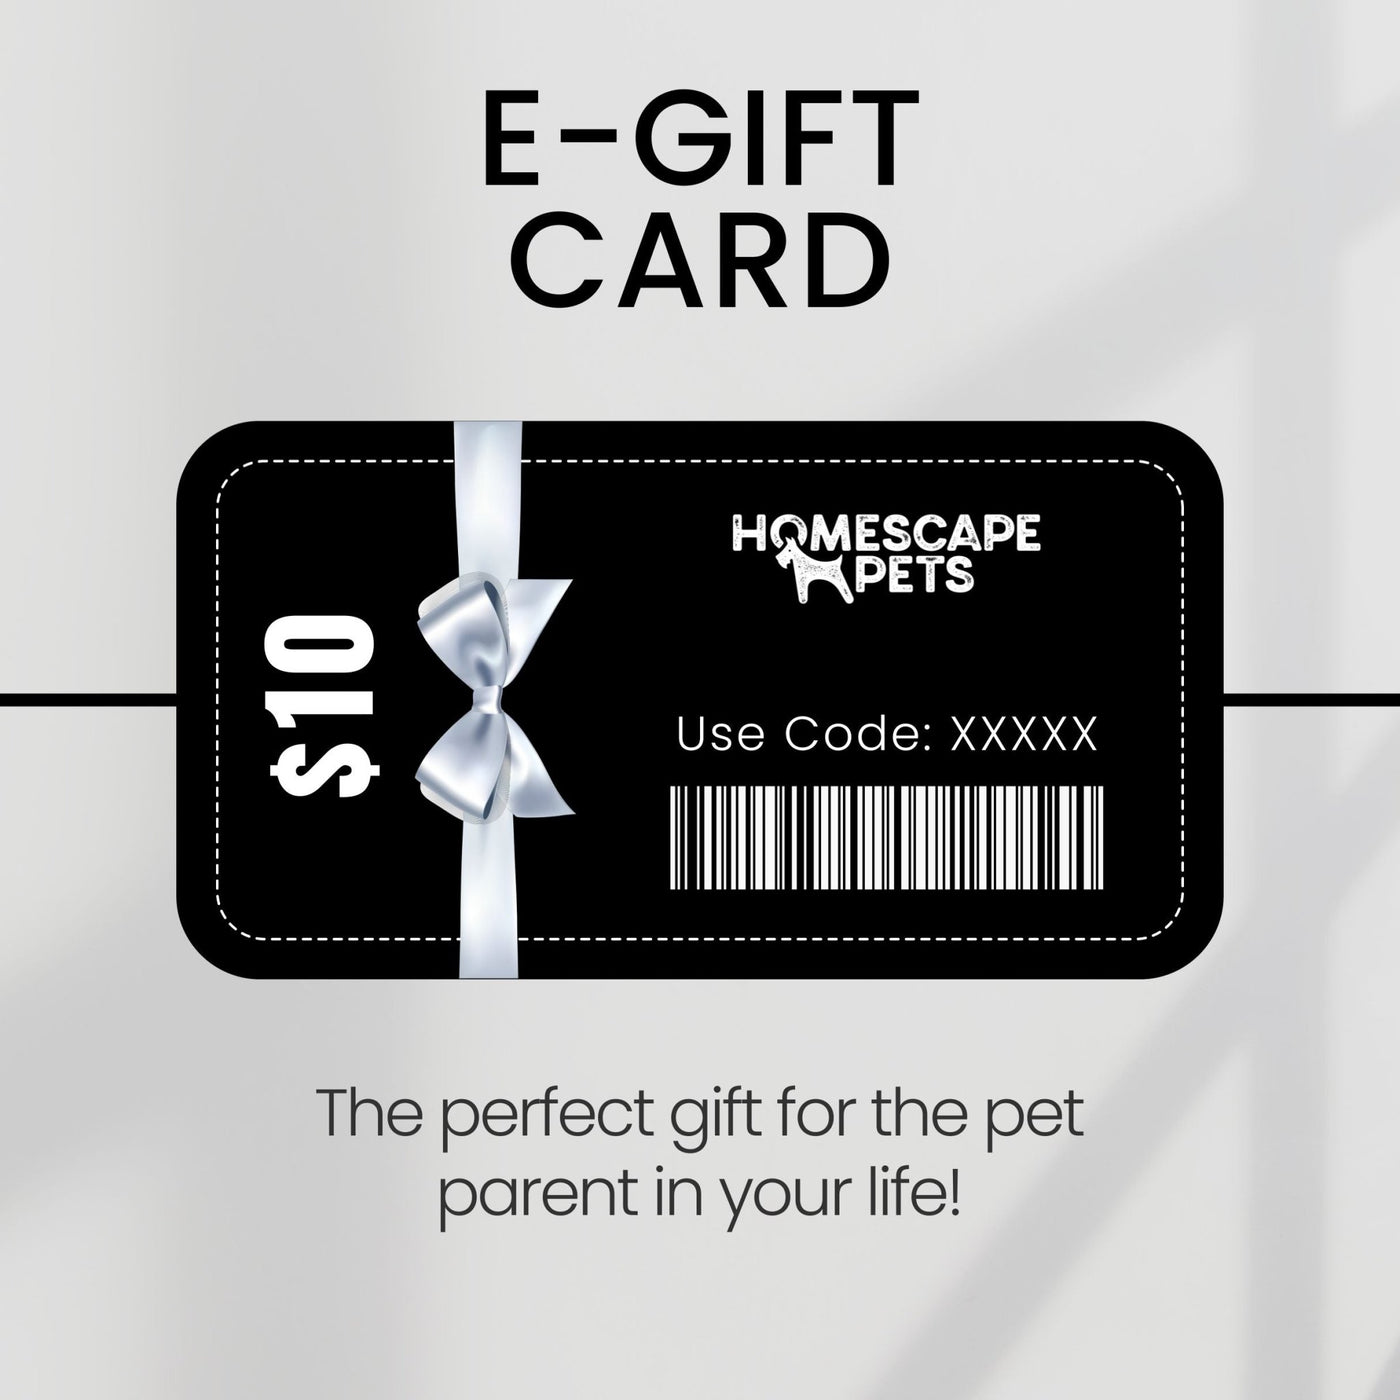 E-Gift Card - Homescape Pets